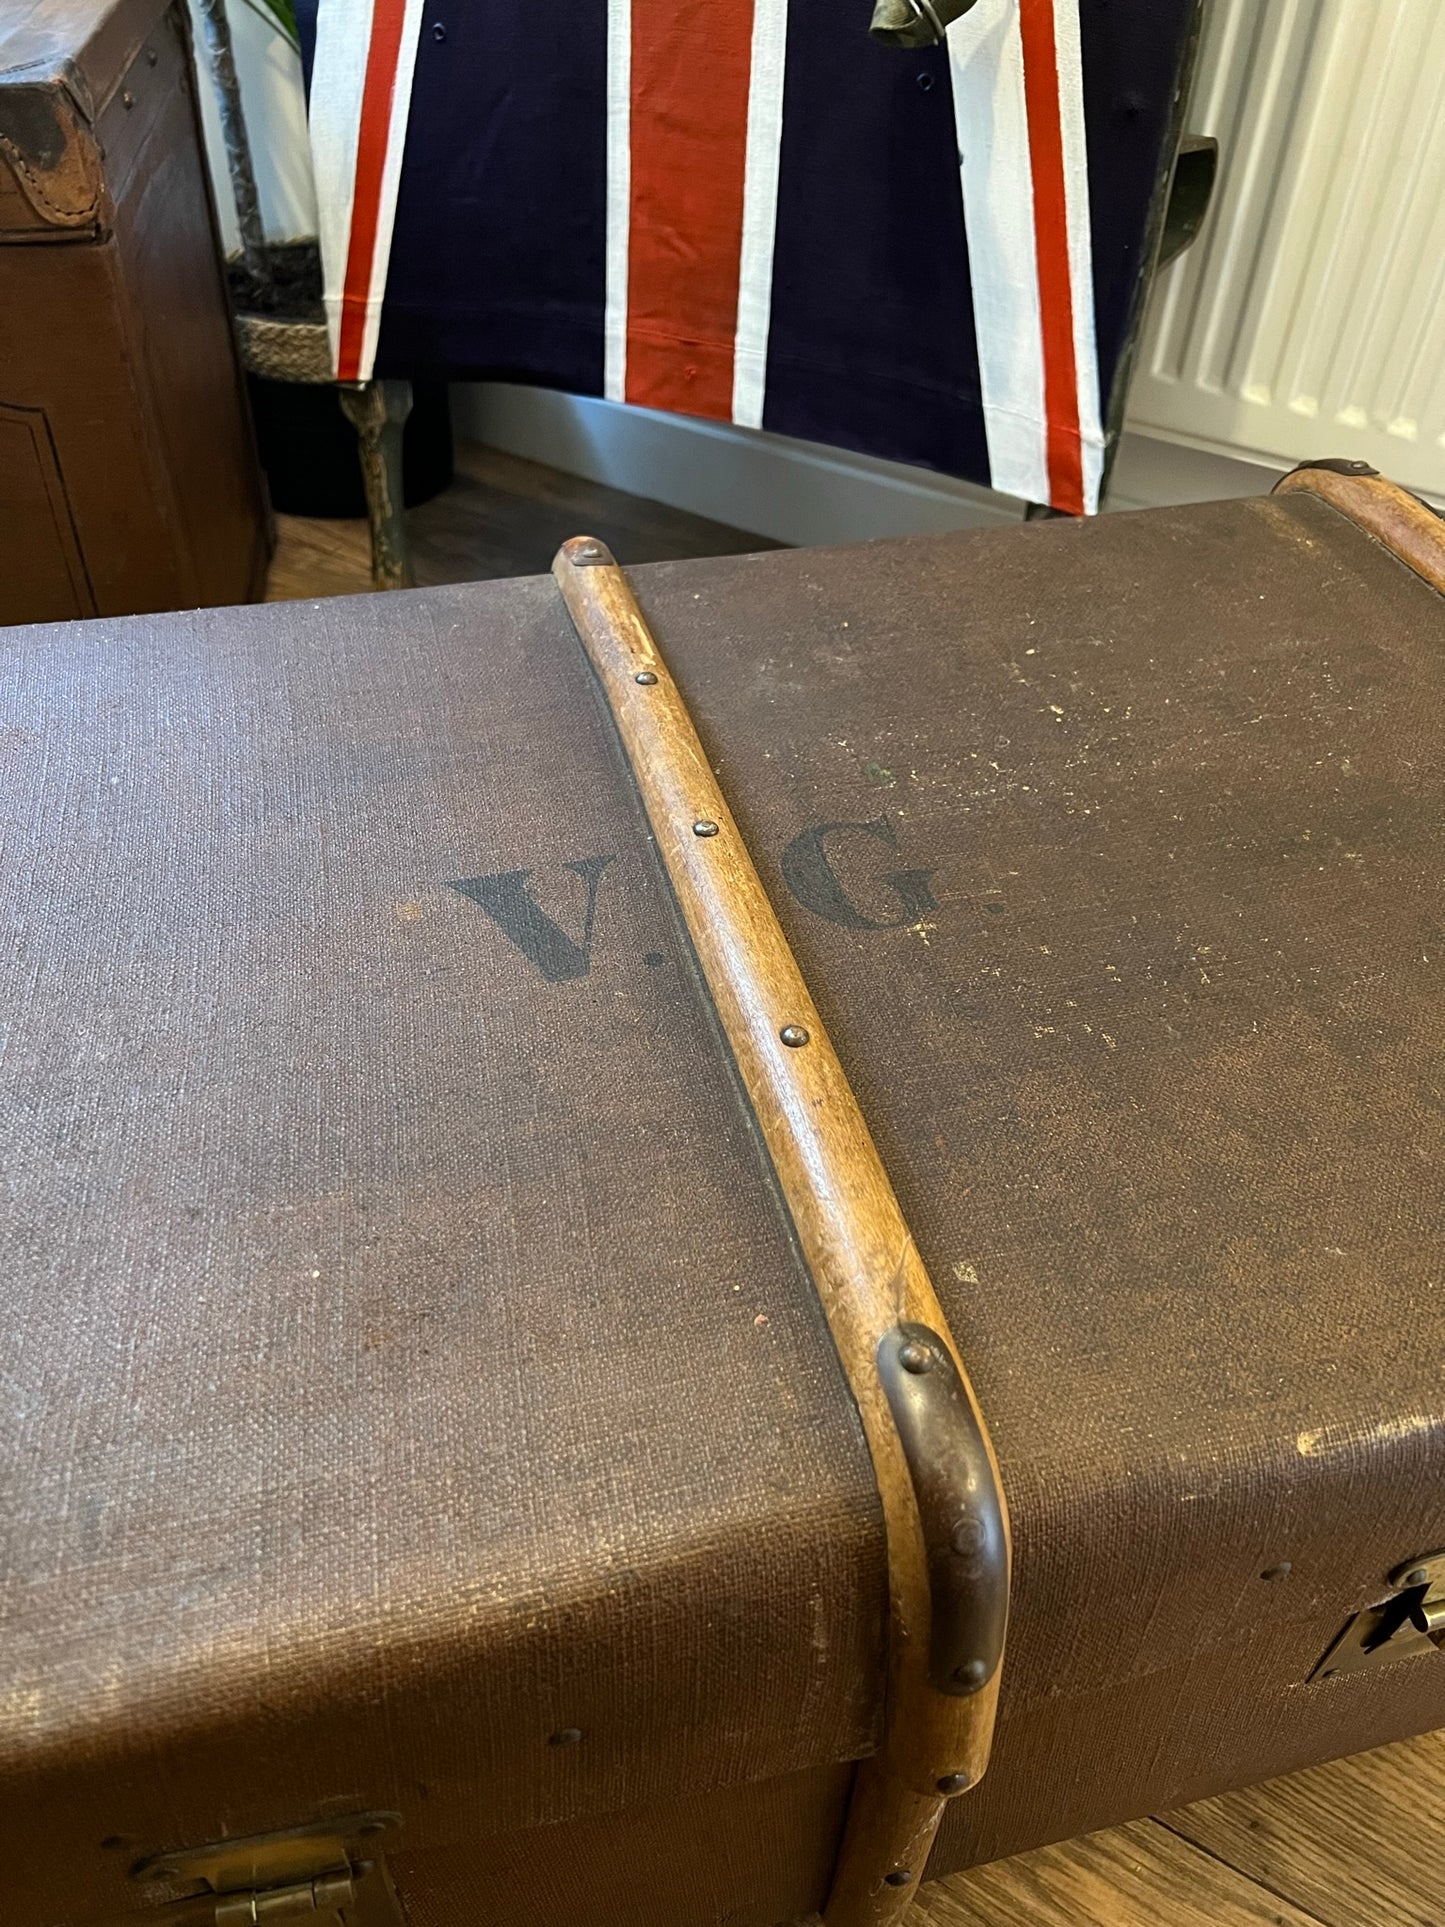 Vintage Steamer Trunk Suitcase Coffee Side Table Original Travel Storage Trunk GWR Label